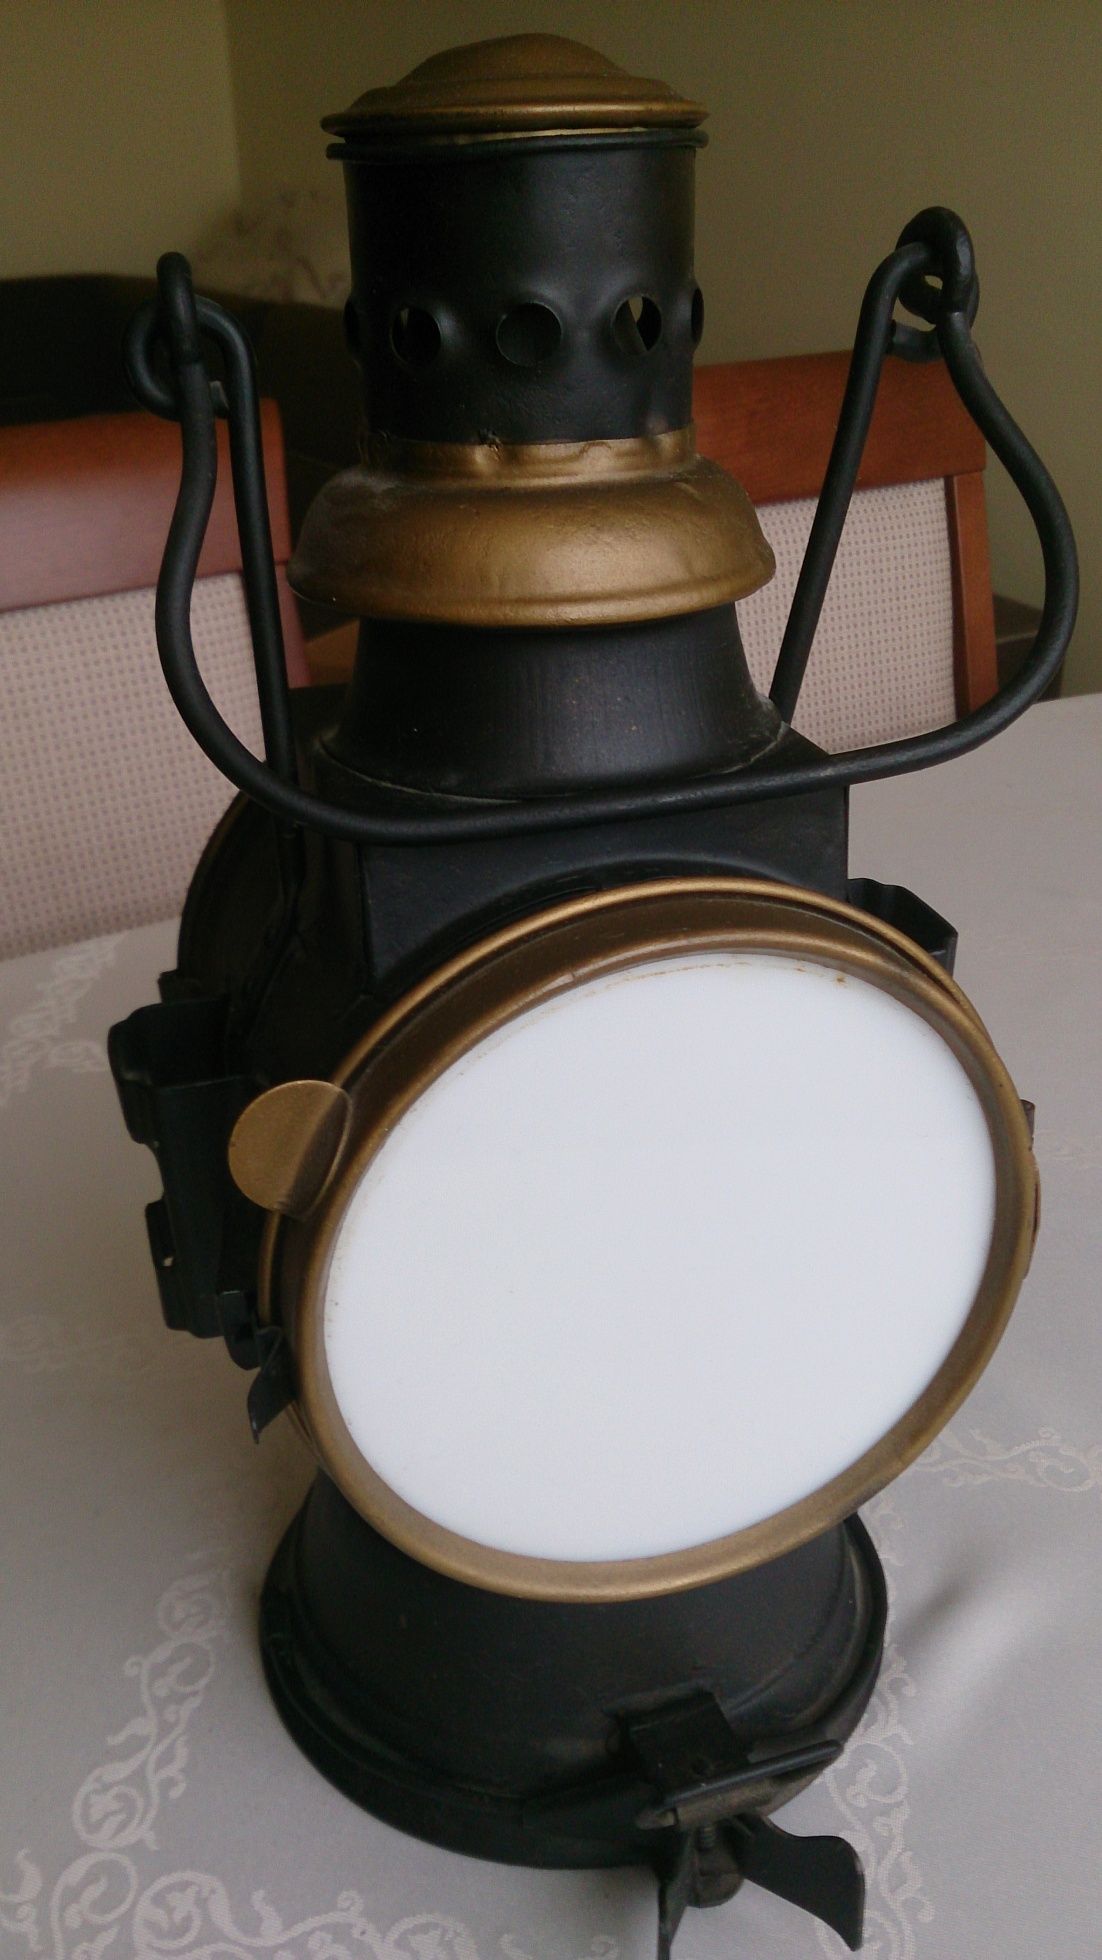 Lampa naftowa semaforowa PKP działająca.